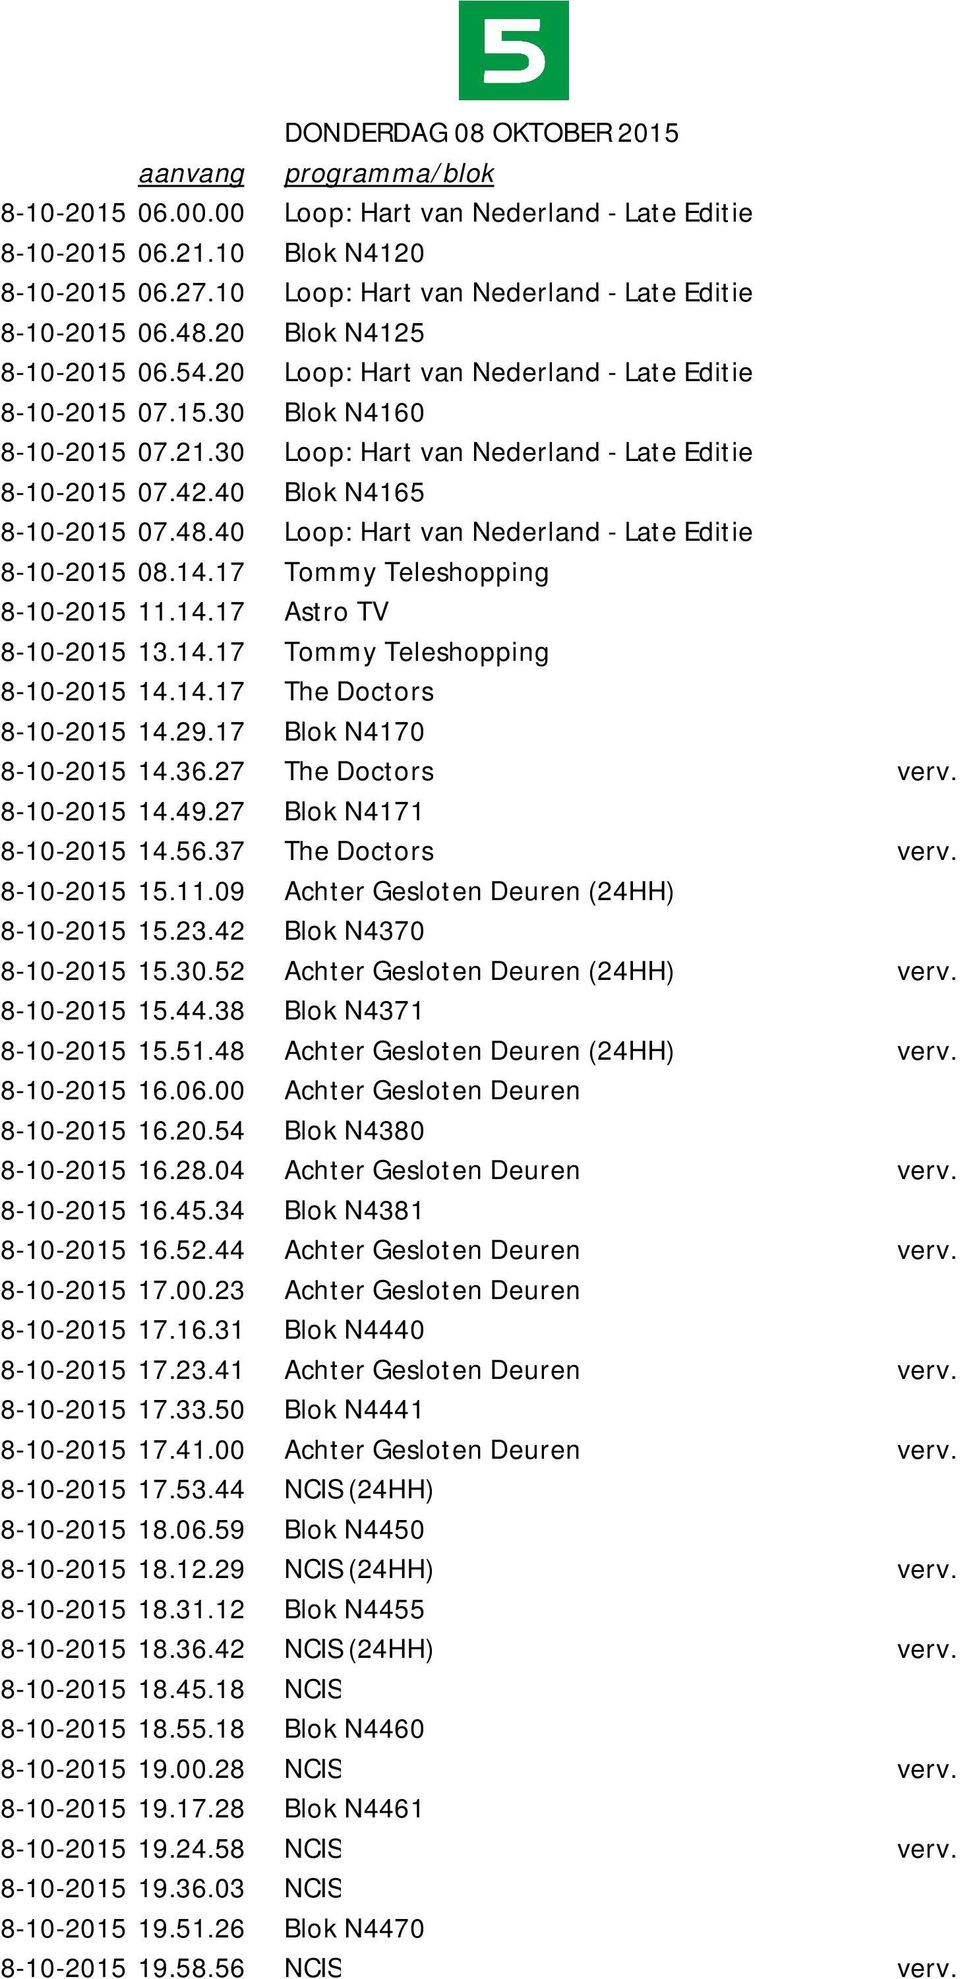 30 Loop: Hart van Nederland - Late Editie 8-10-2015 07.42.40 Blok N4165 8-10-2015 07.48.40 Loop: Hart van Nederland - Late Editie 8-10-2015 08.14.17 Tommy Teleshopping 8-10-2015 11.14.17 Astro TV 8-10-2015 13.